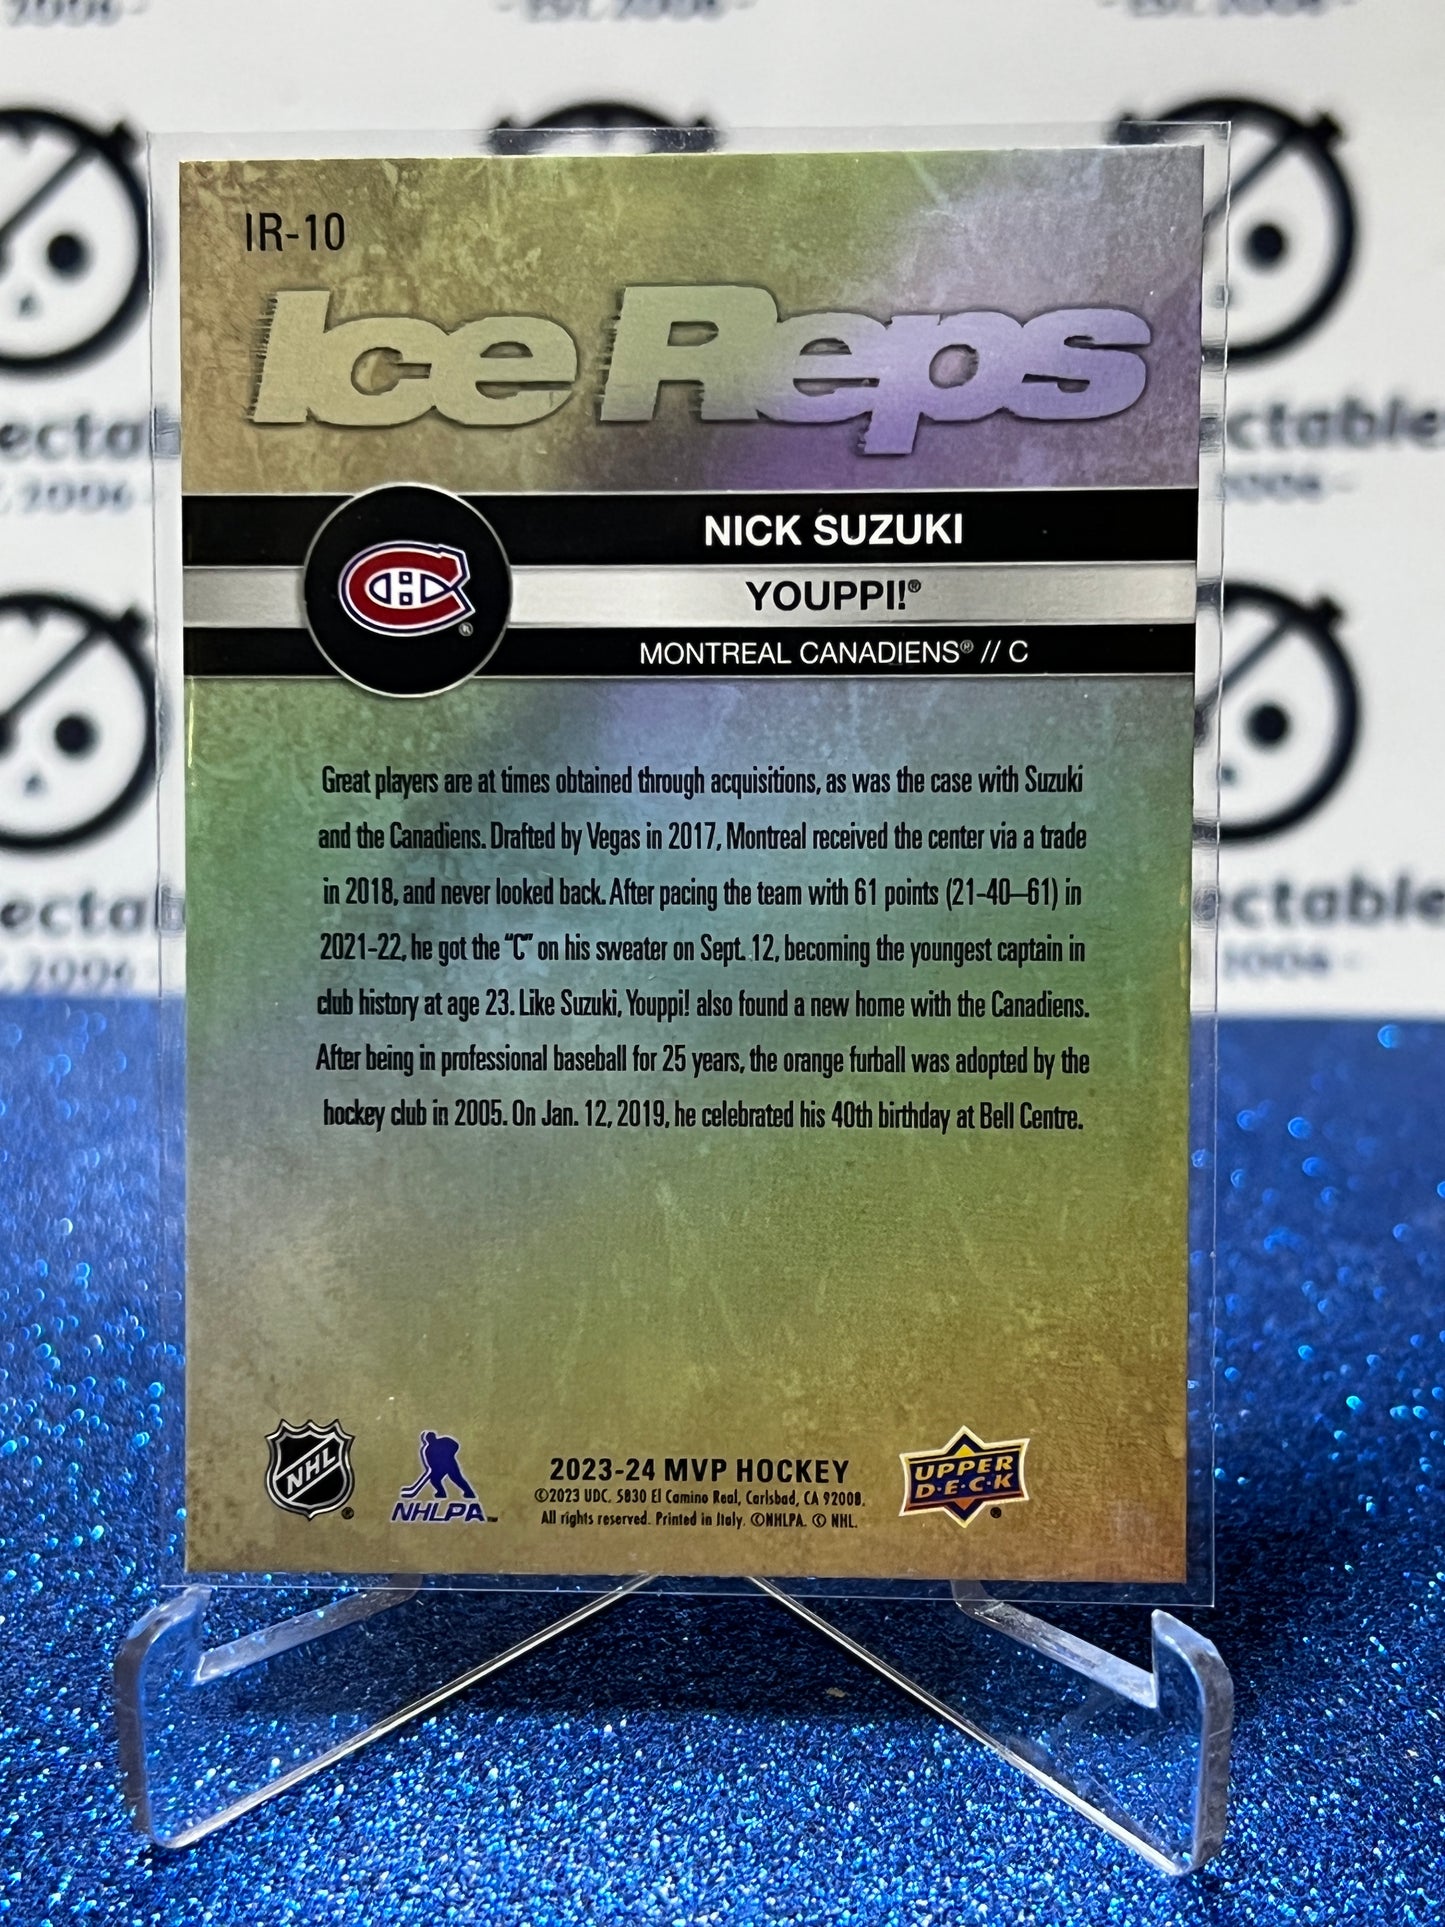 2003-24 UPPER DECK NICK SUZUKI # IR-10 ICE REPS MONTREAL CANADIANS HOCKEY CARD